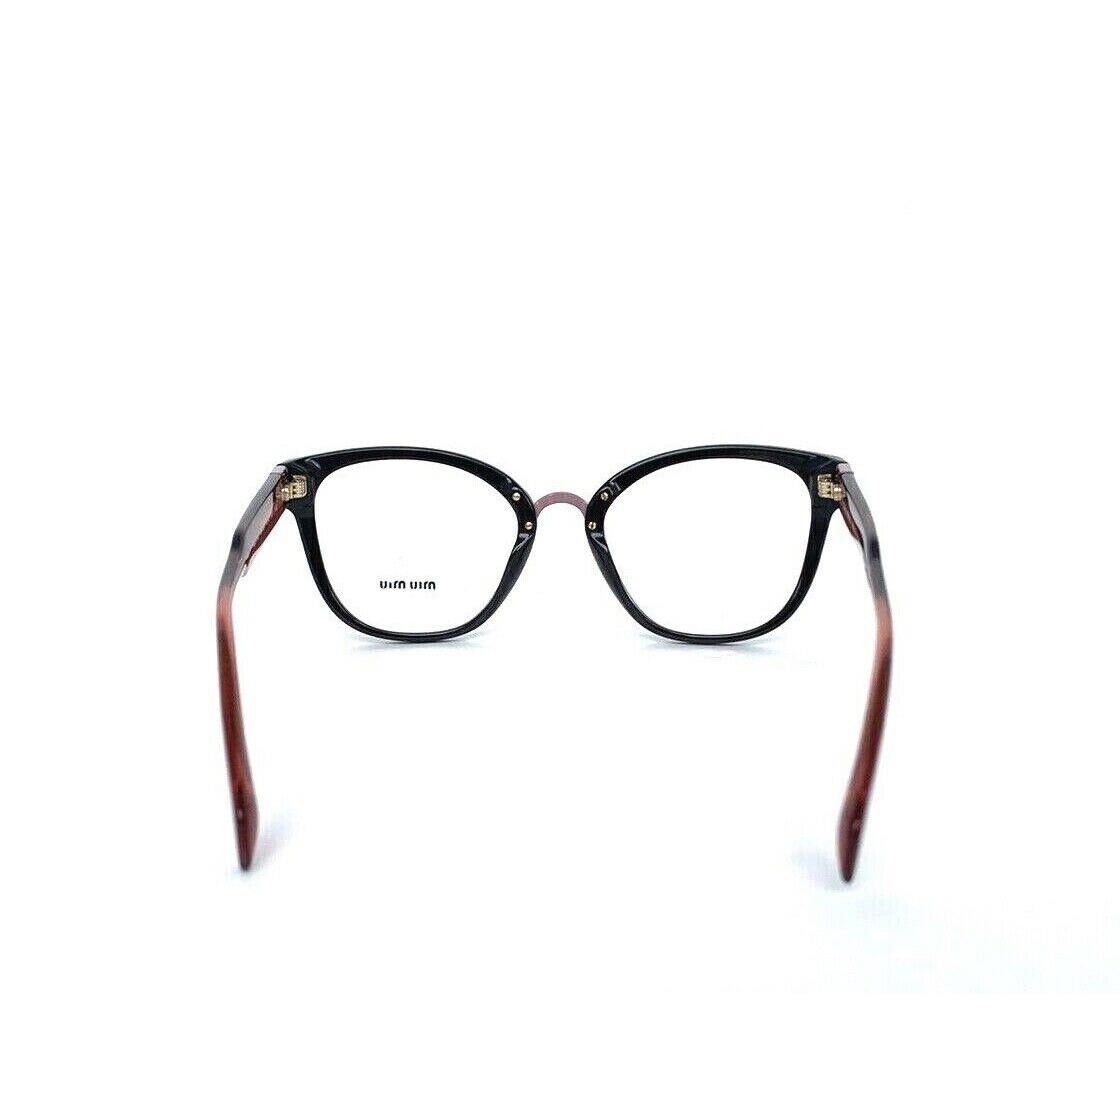 Miu Miu eyeglasses  - Brown on Gold Frame 4